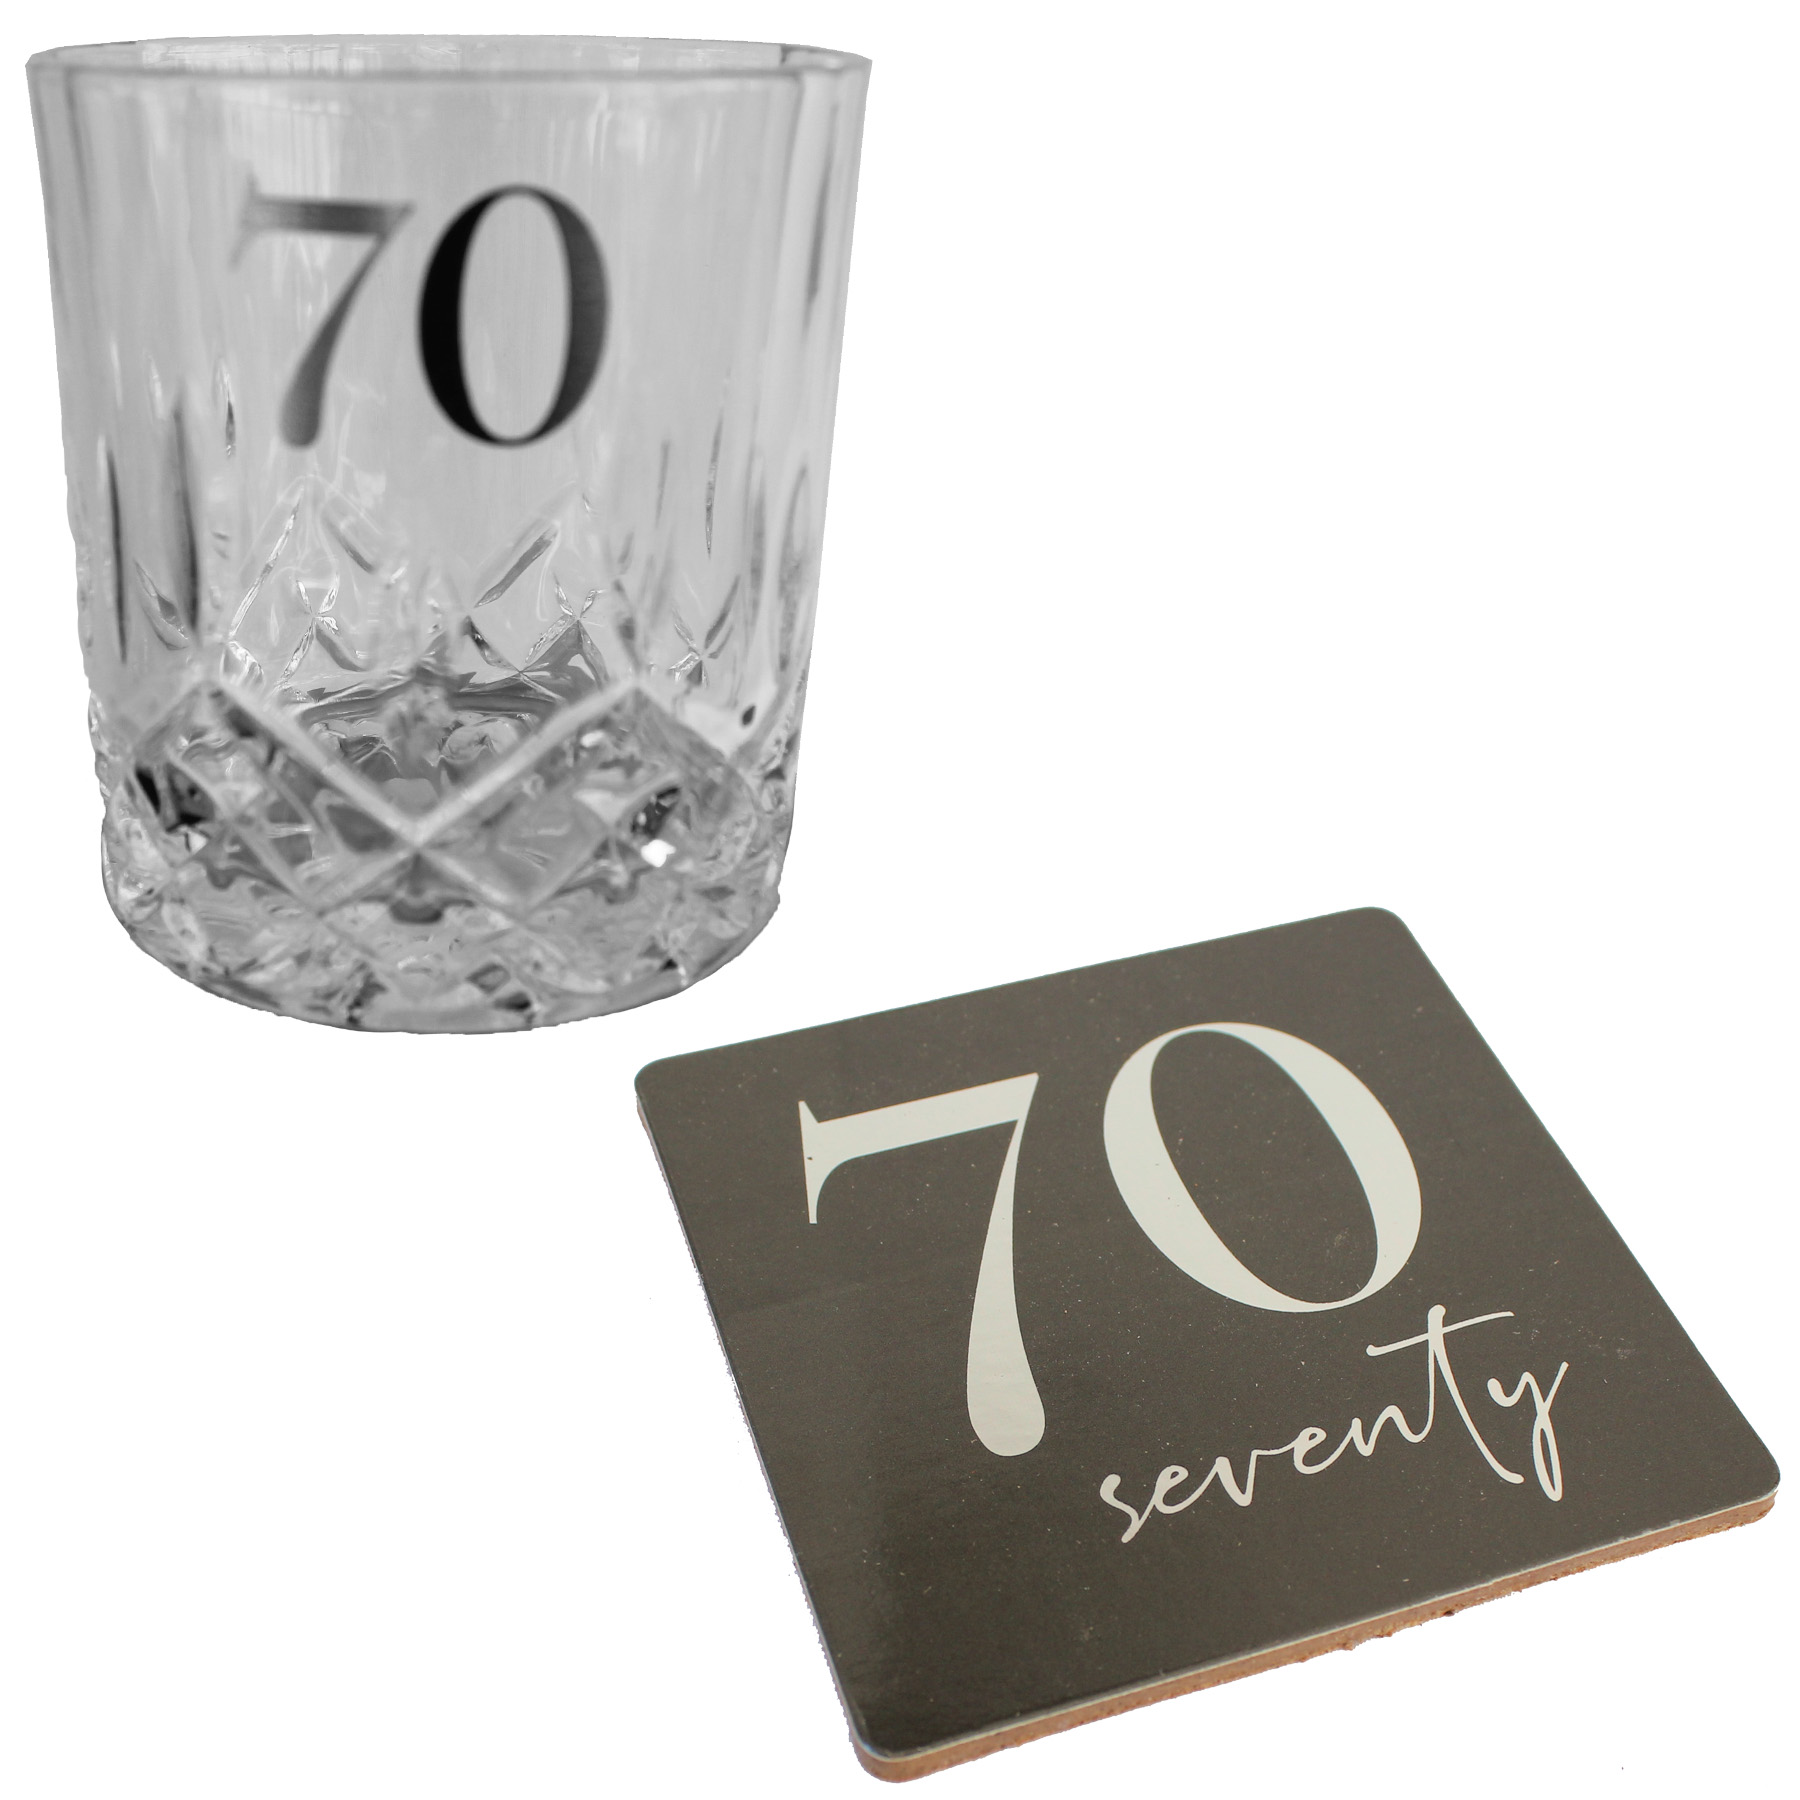 Cut Glass Whisky Tumbler and Coaster Set Gift Box - 70th Birthday